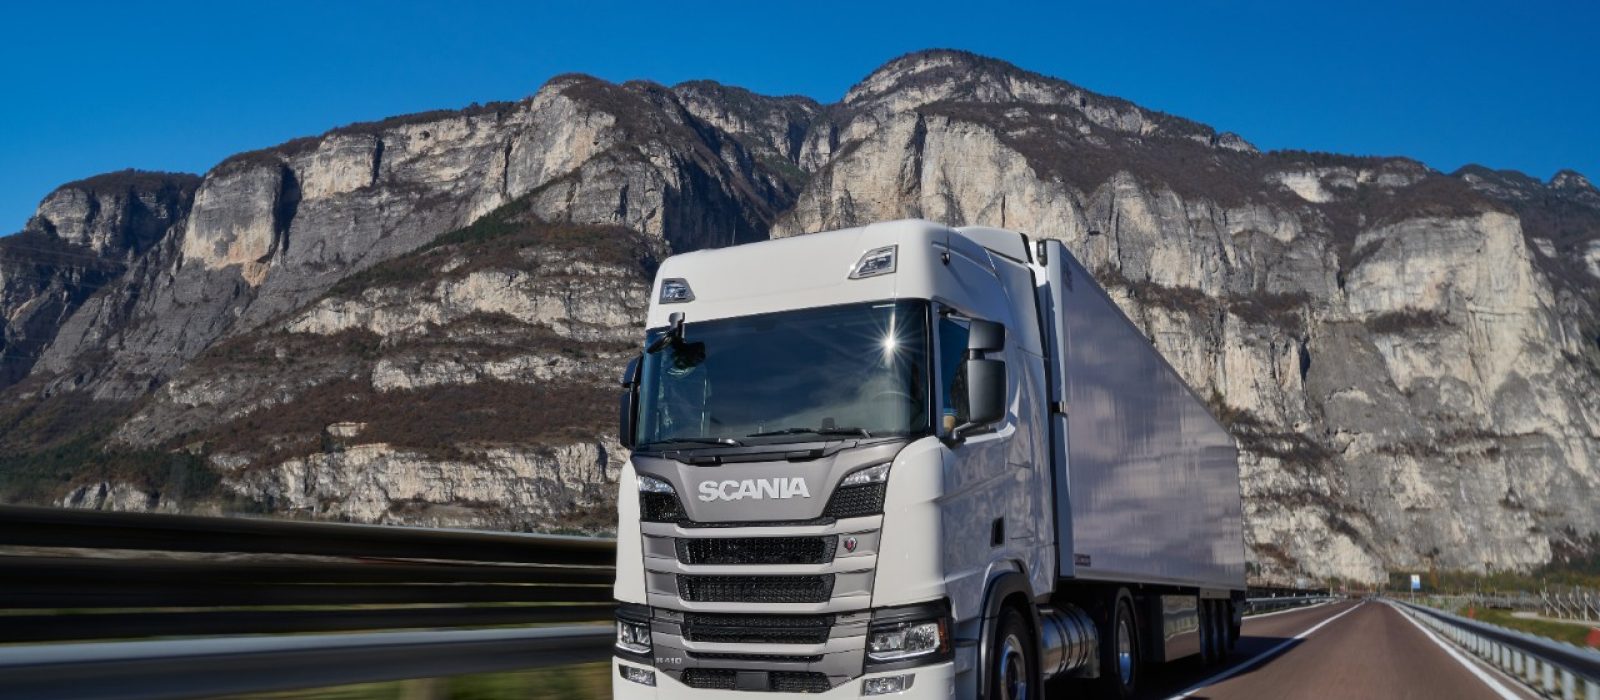 Тягачи и грузовые автомобили Scania CNG на природном газе (метане)